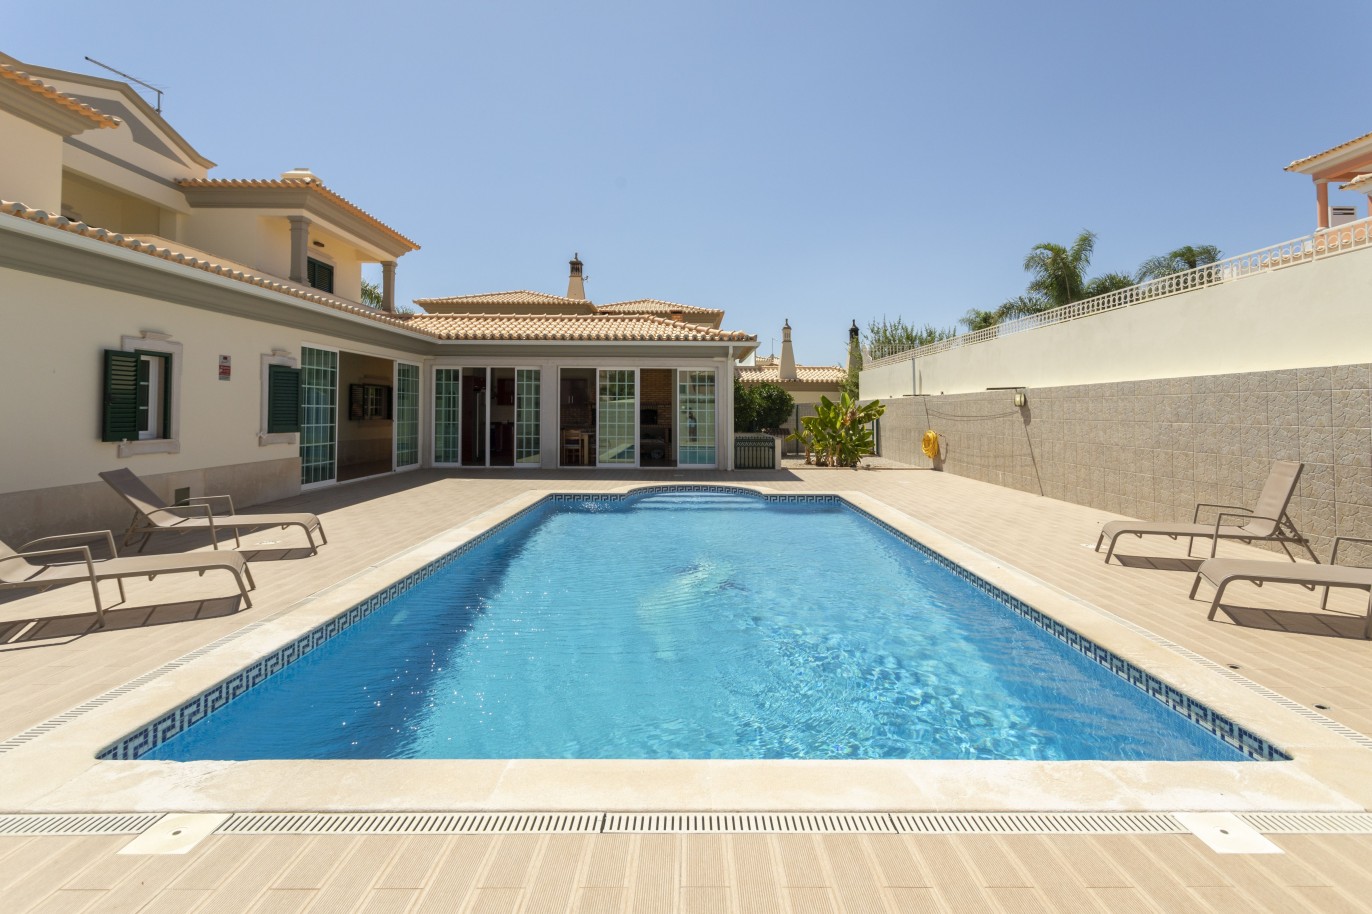 Spectacular 5 bedroom villa with pool, for sale in Albufeira, Algarve_233854